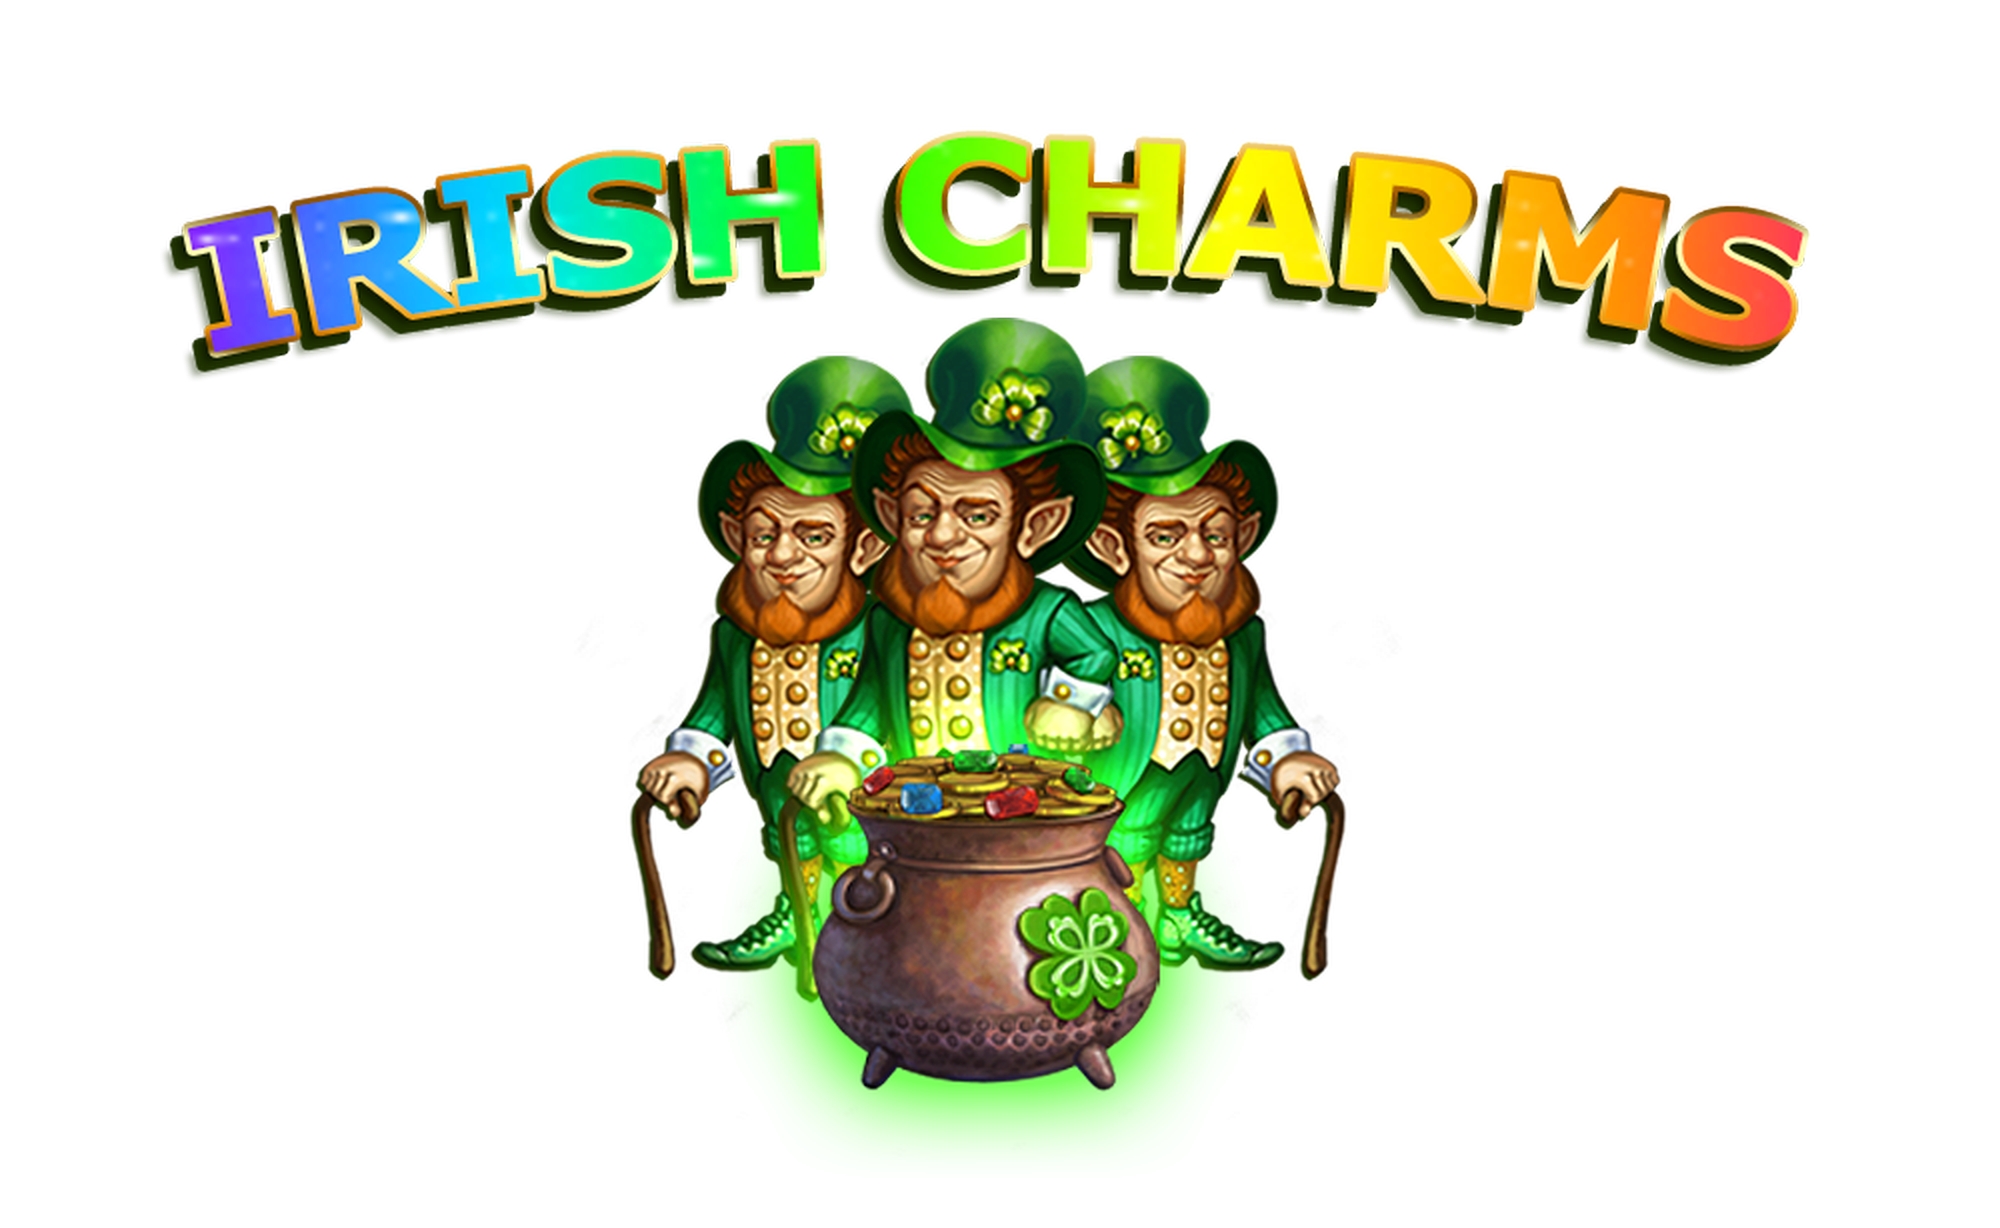 Irish Charms demo